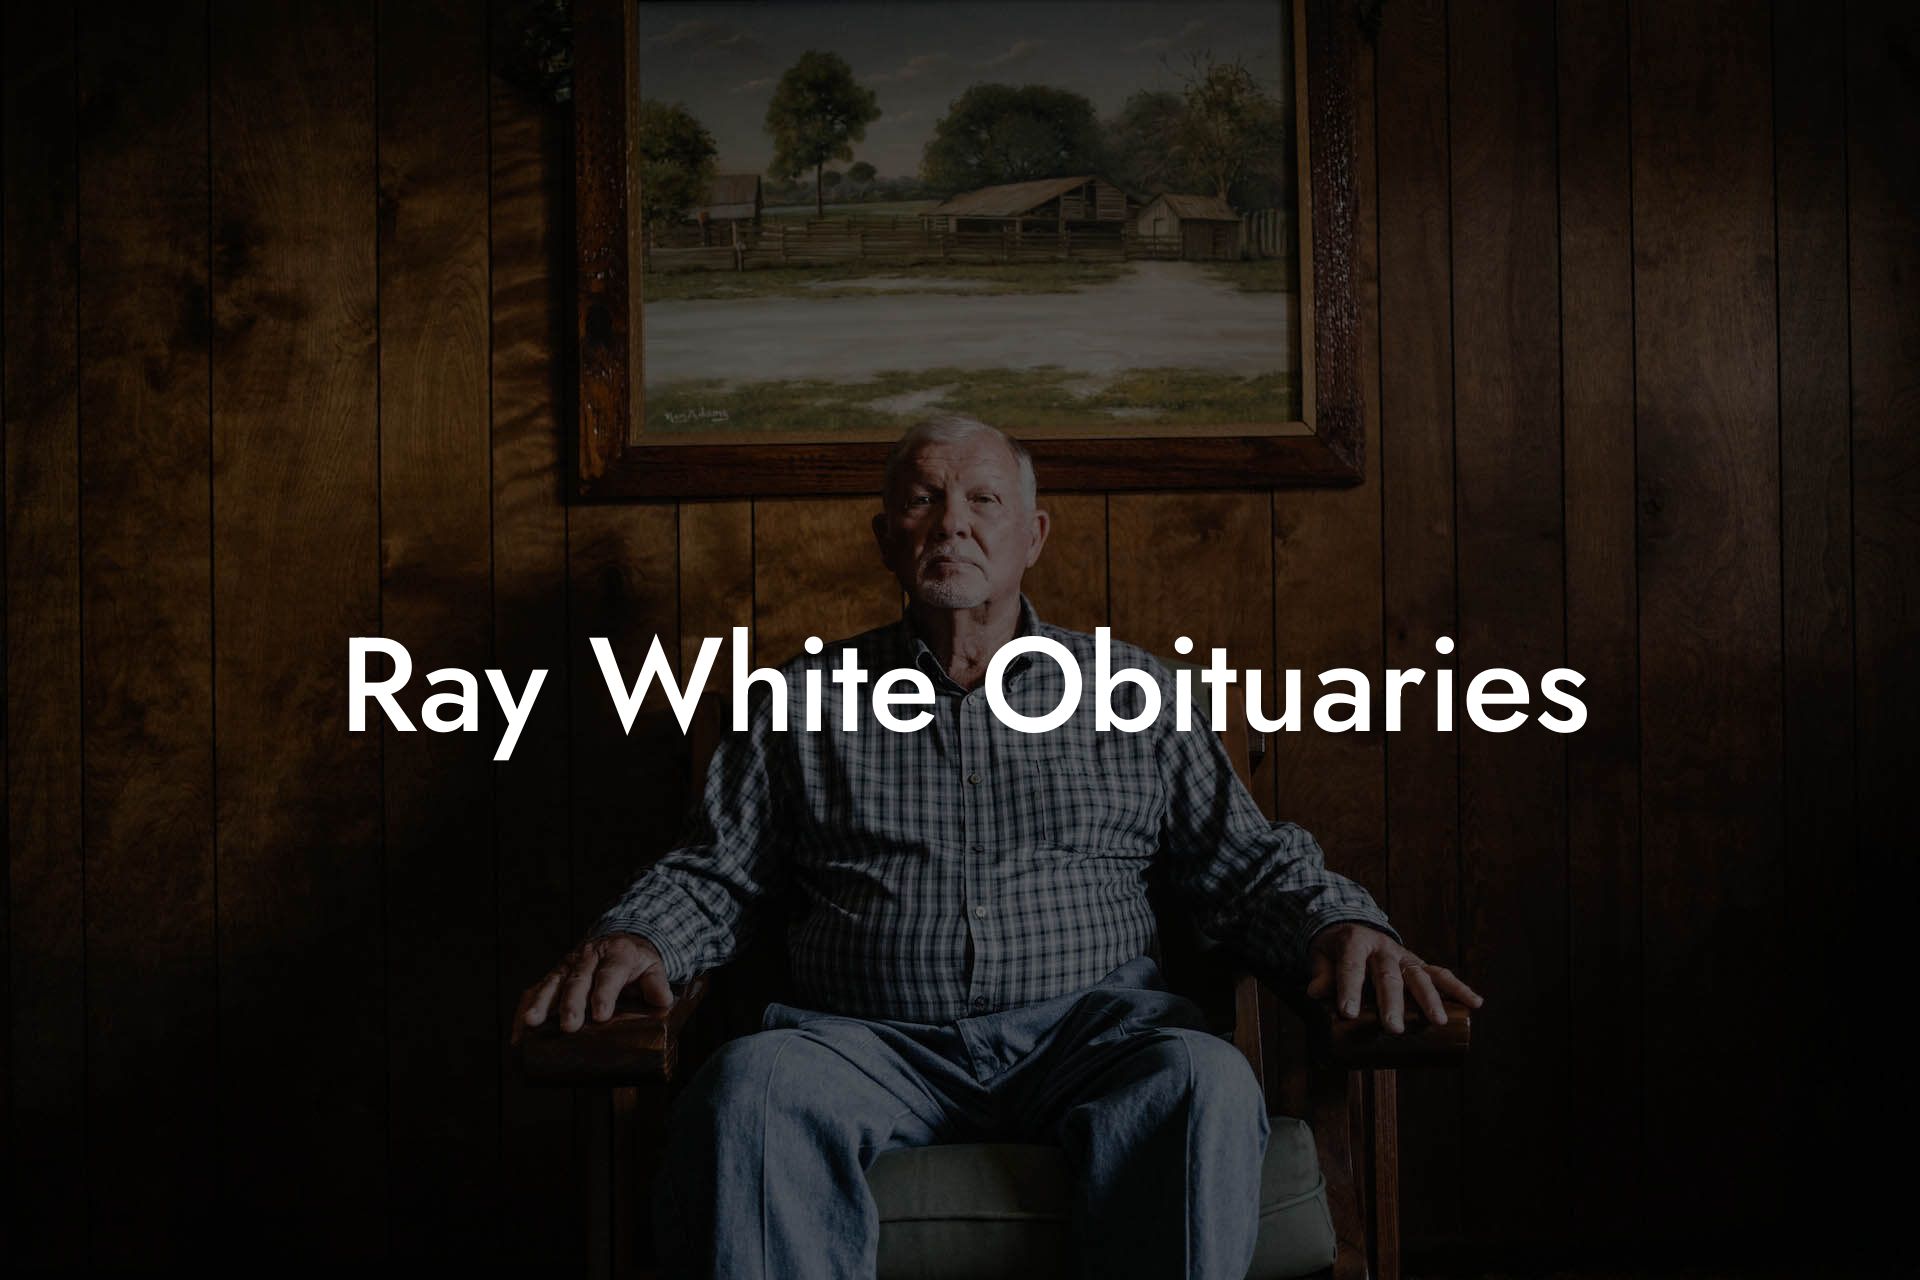 Ray White Obituaries